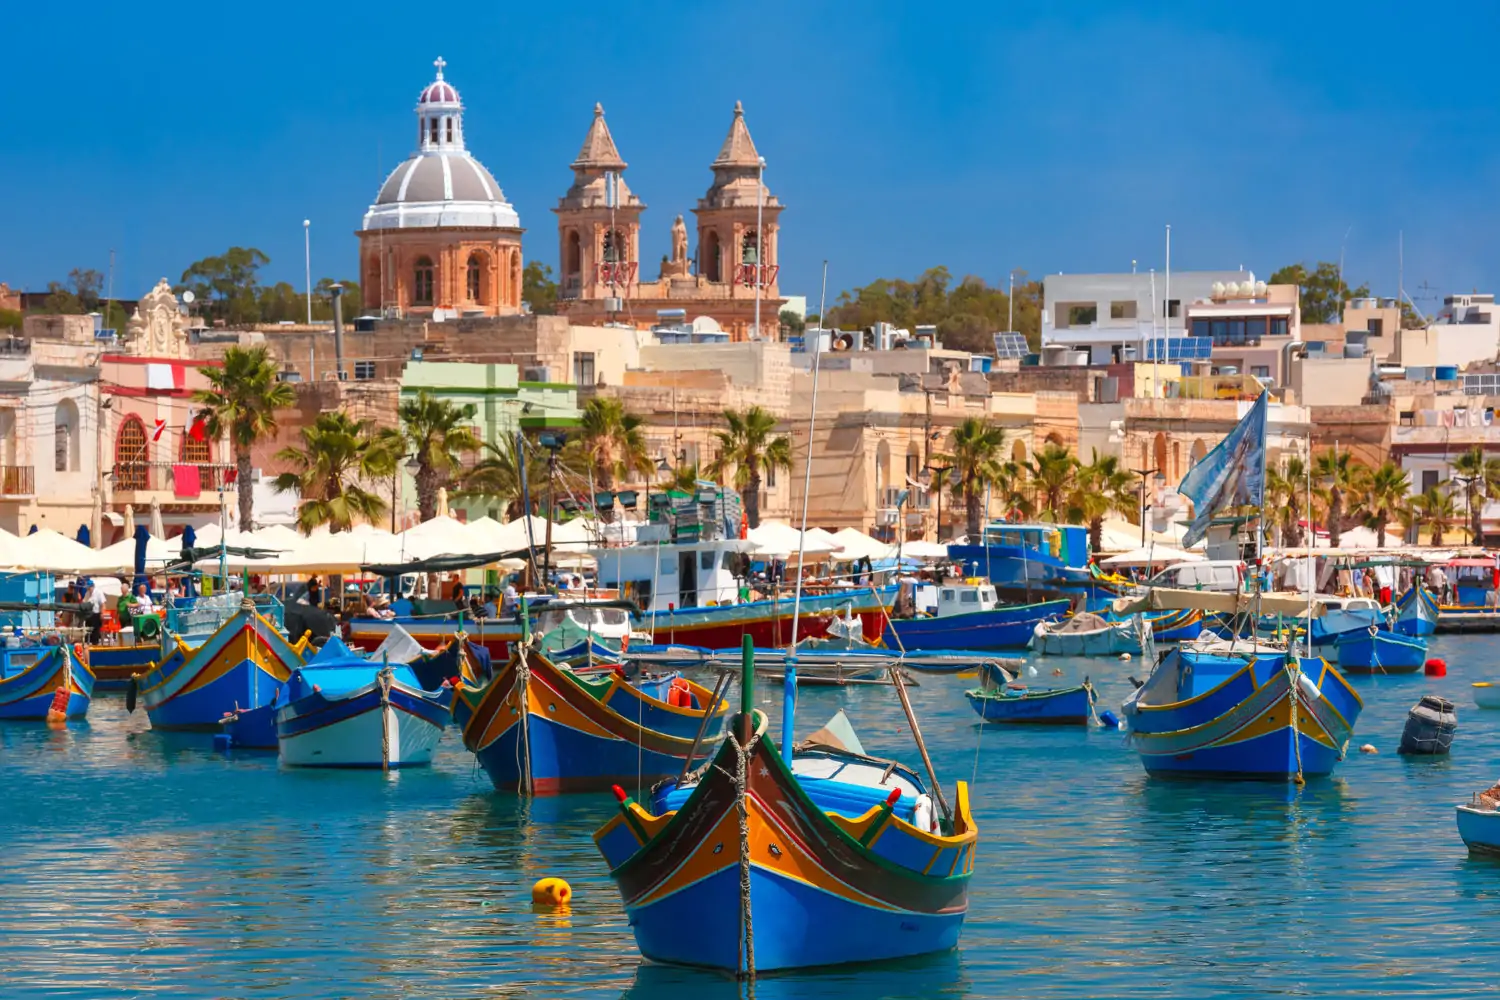 Malta, Traditional eyed colorful boats Luzzu in the Harbor of Mediterranean fishing village Marsaxlokk, Malta